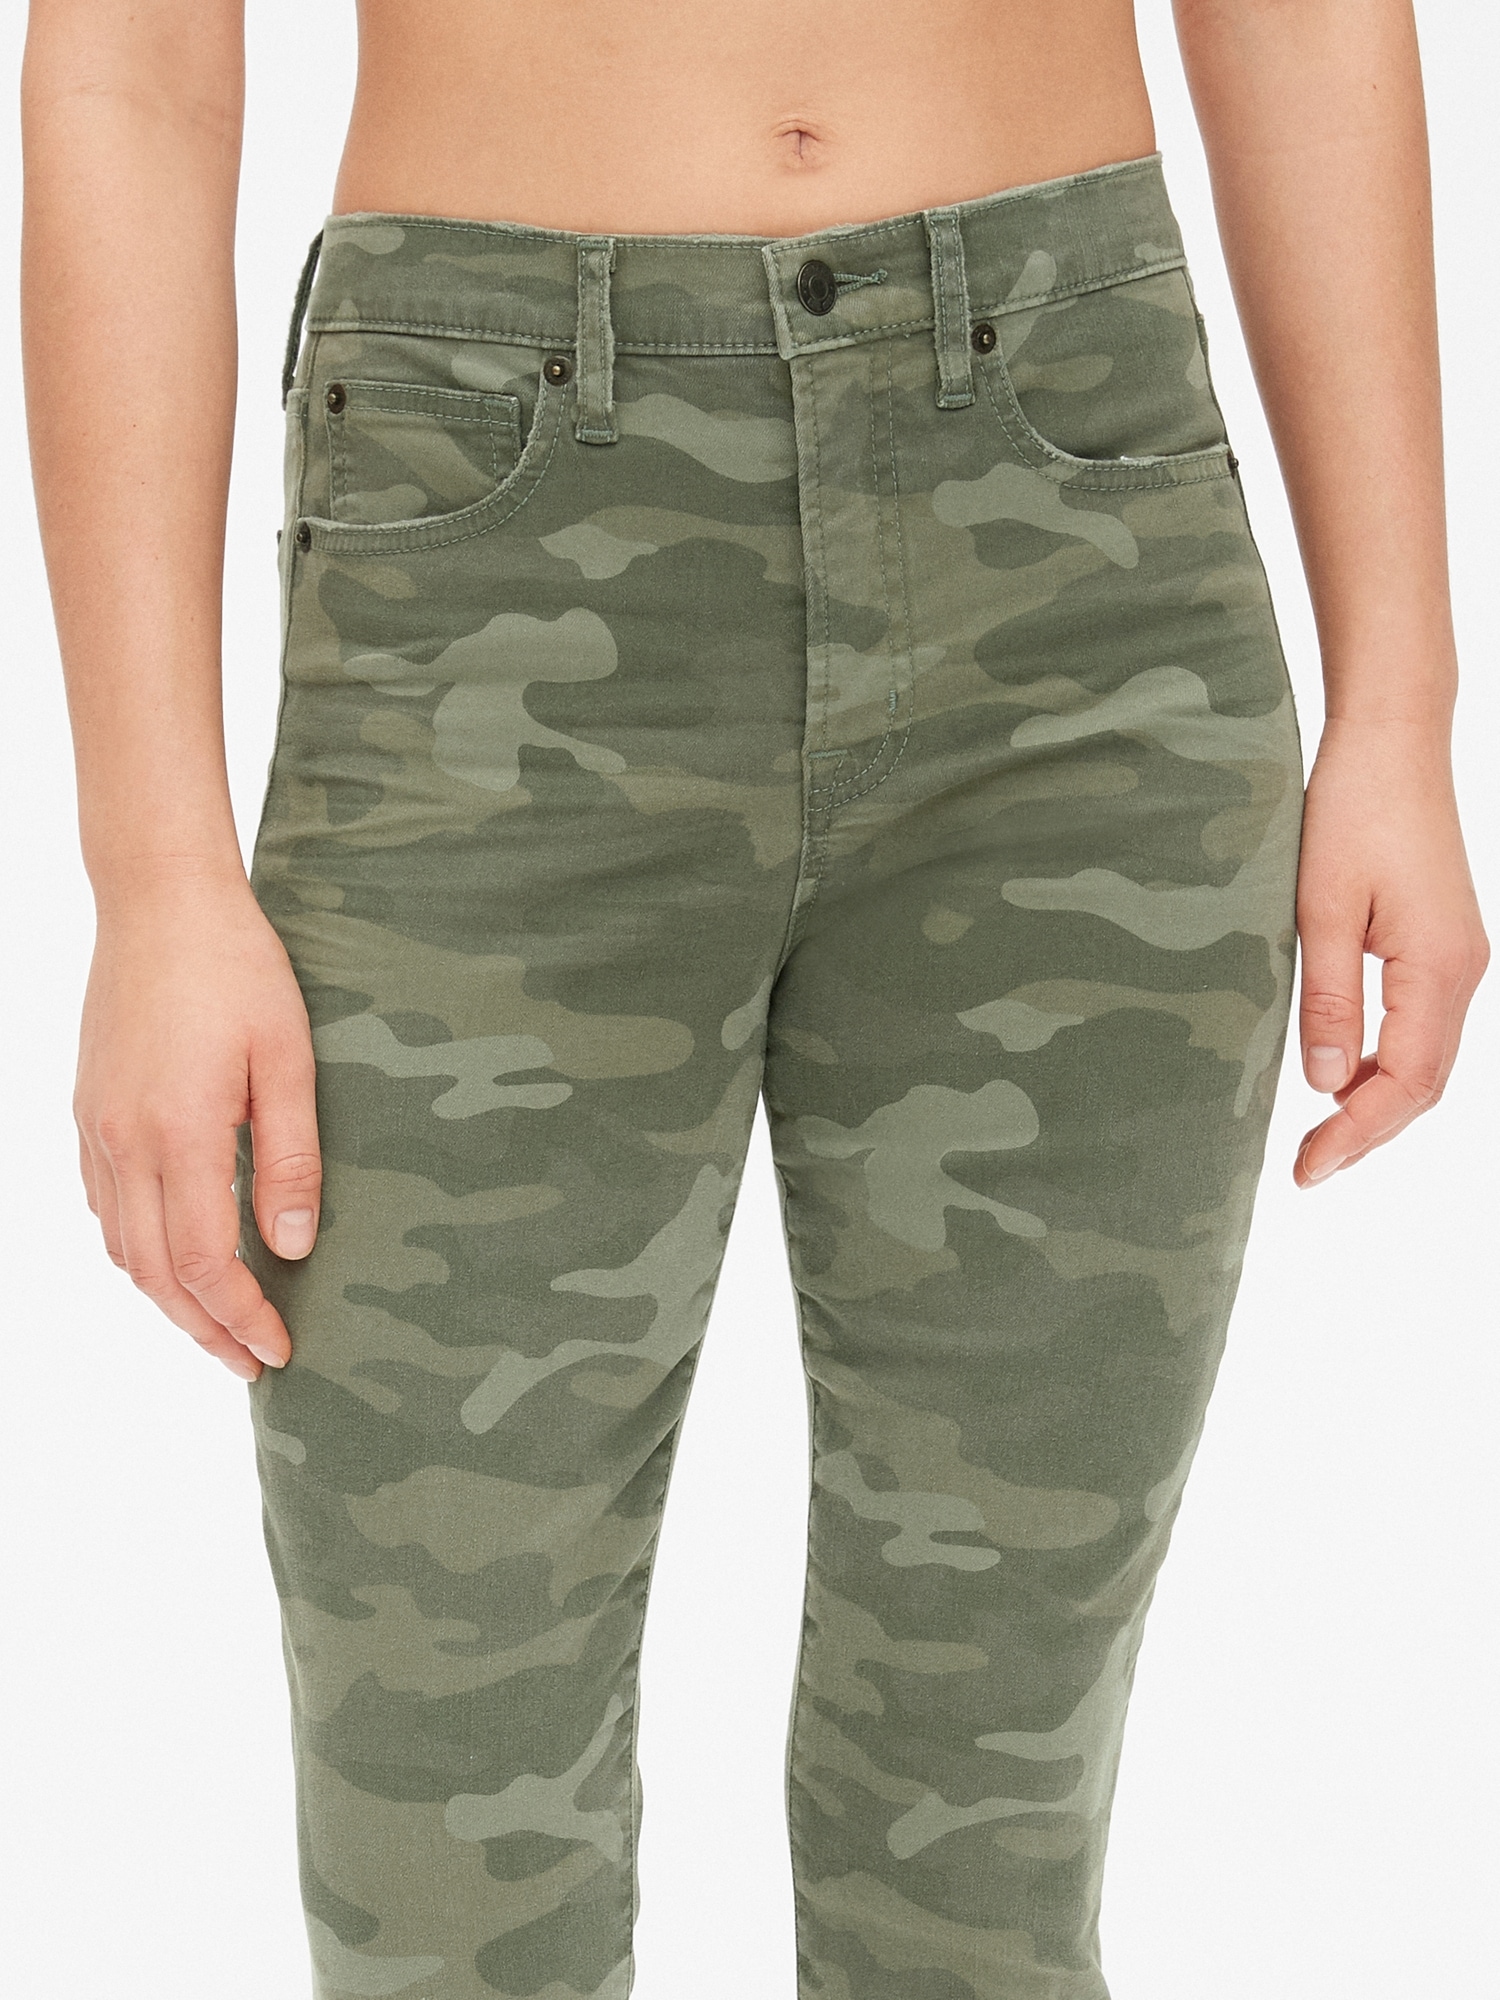 women's petite camouflage pants